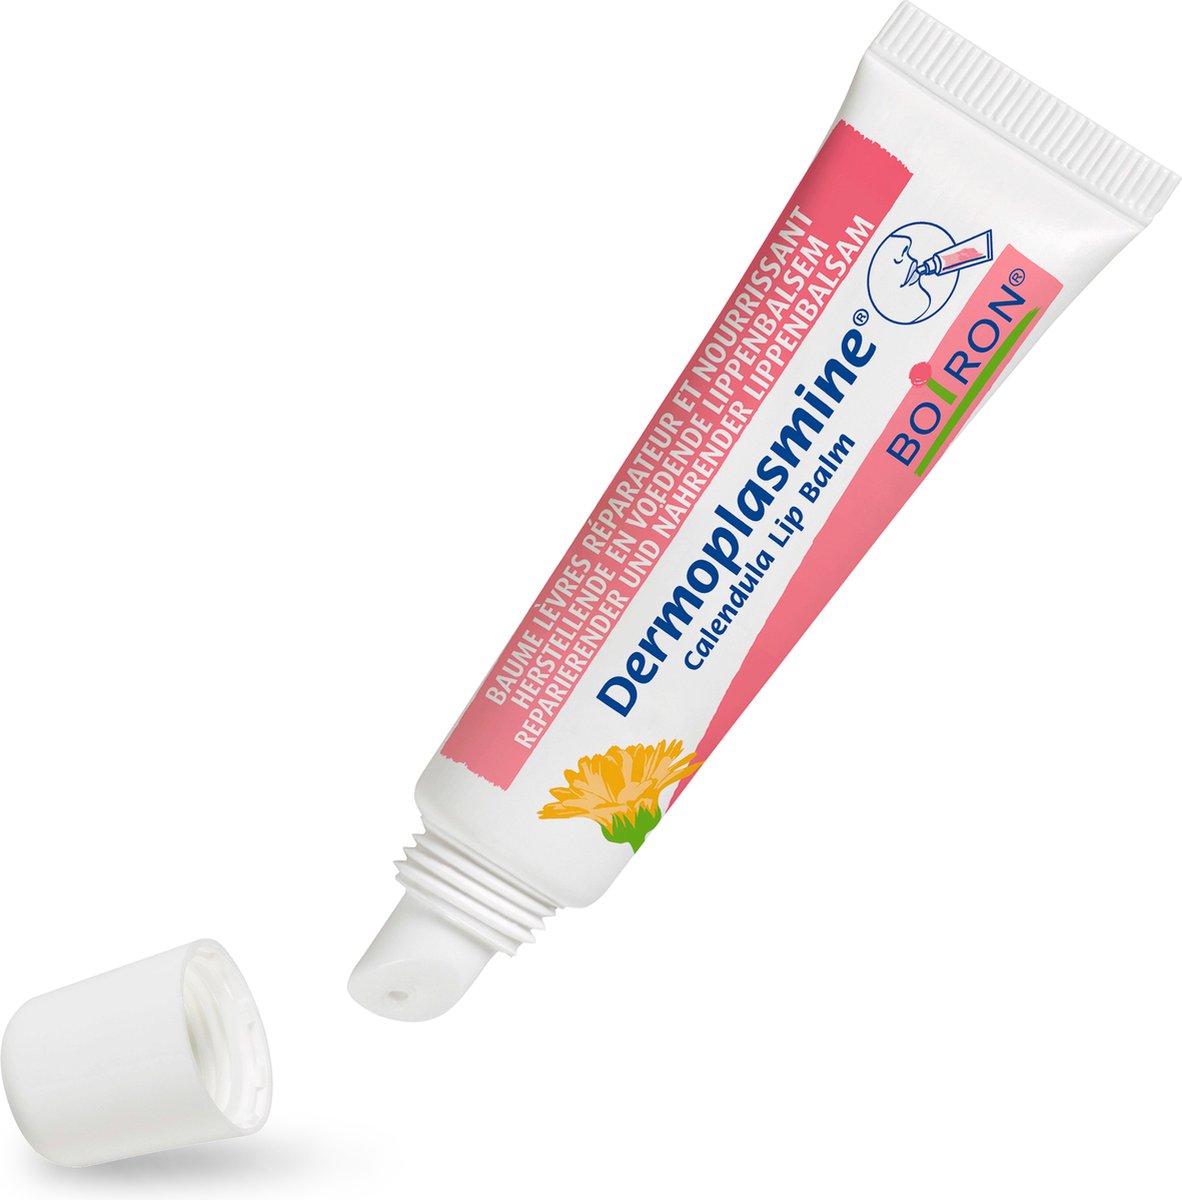 Dermoplasmine Calendula - Lippenbalsem - 10g